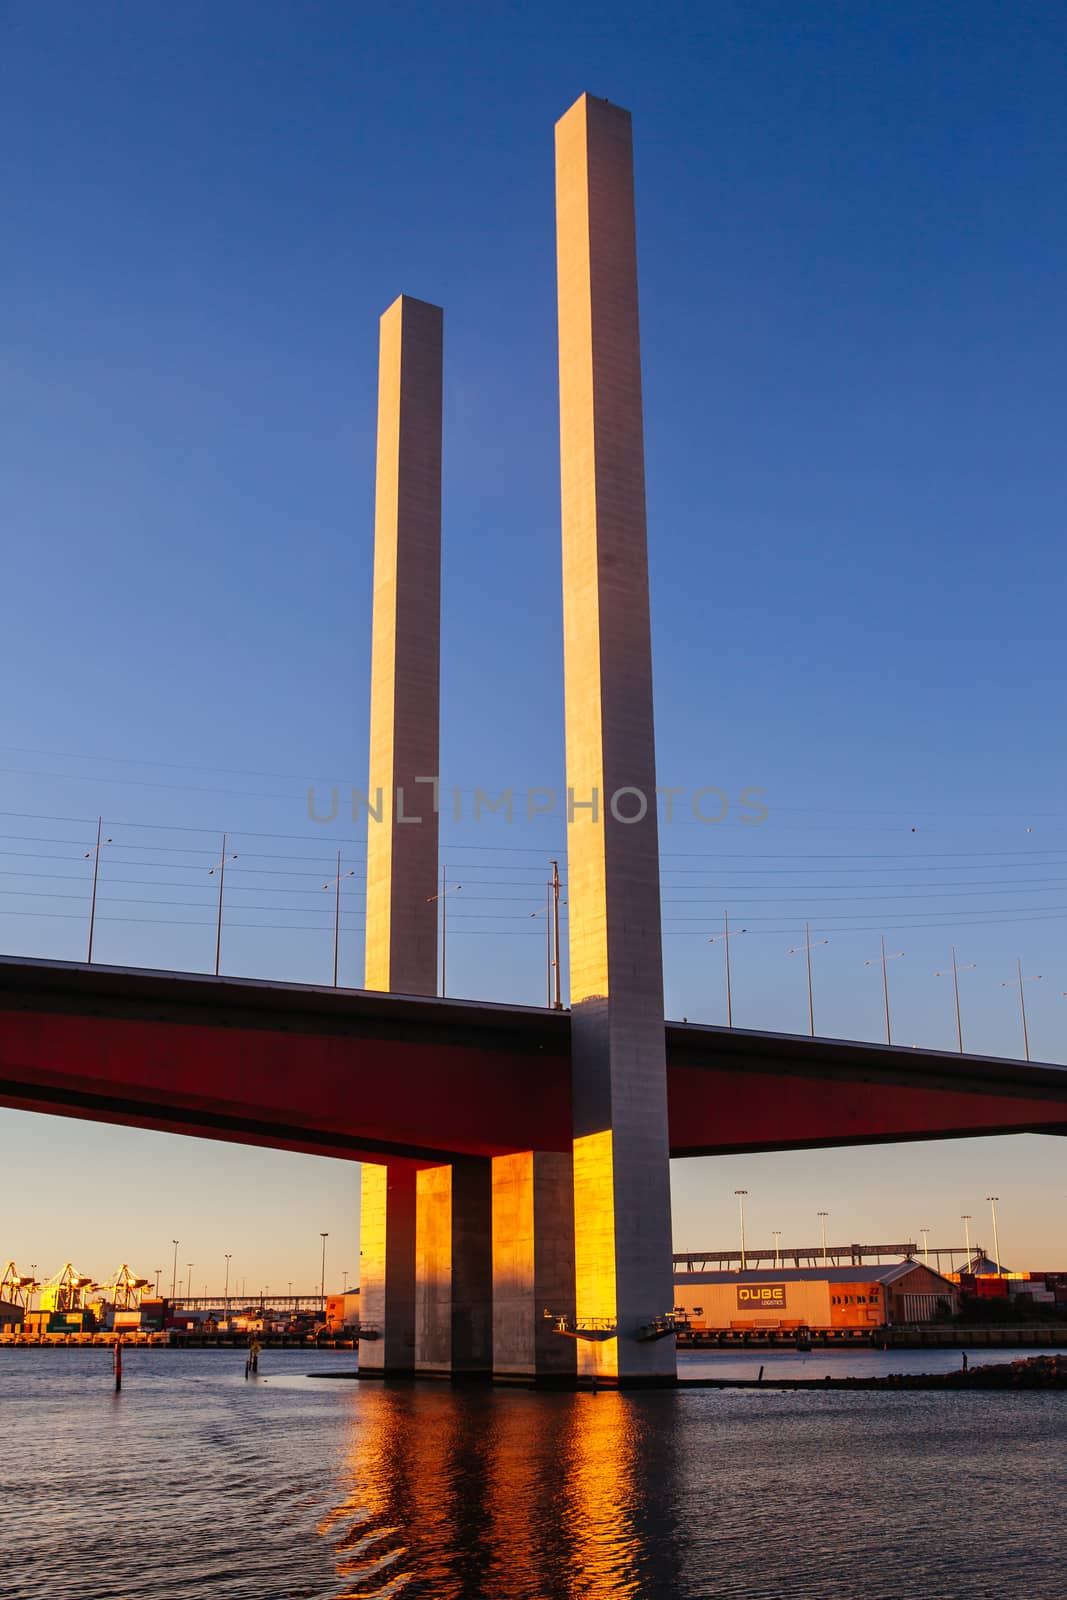 Melbourne, Australia - 17 December 2013: The Bolte Bridge crossing the Yarra River at sunset in Melbourne, Victoria, Australia